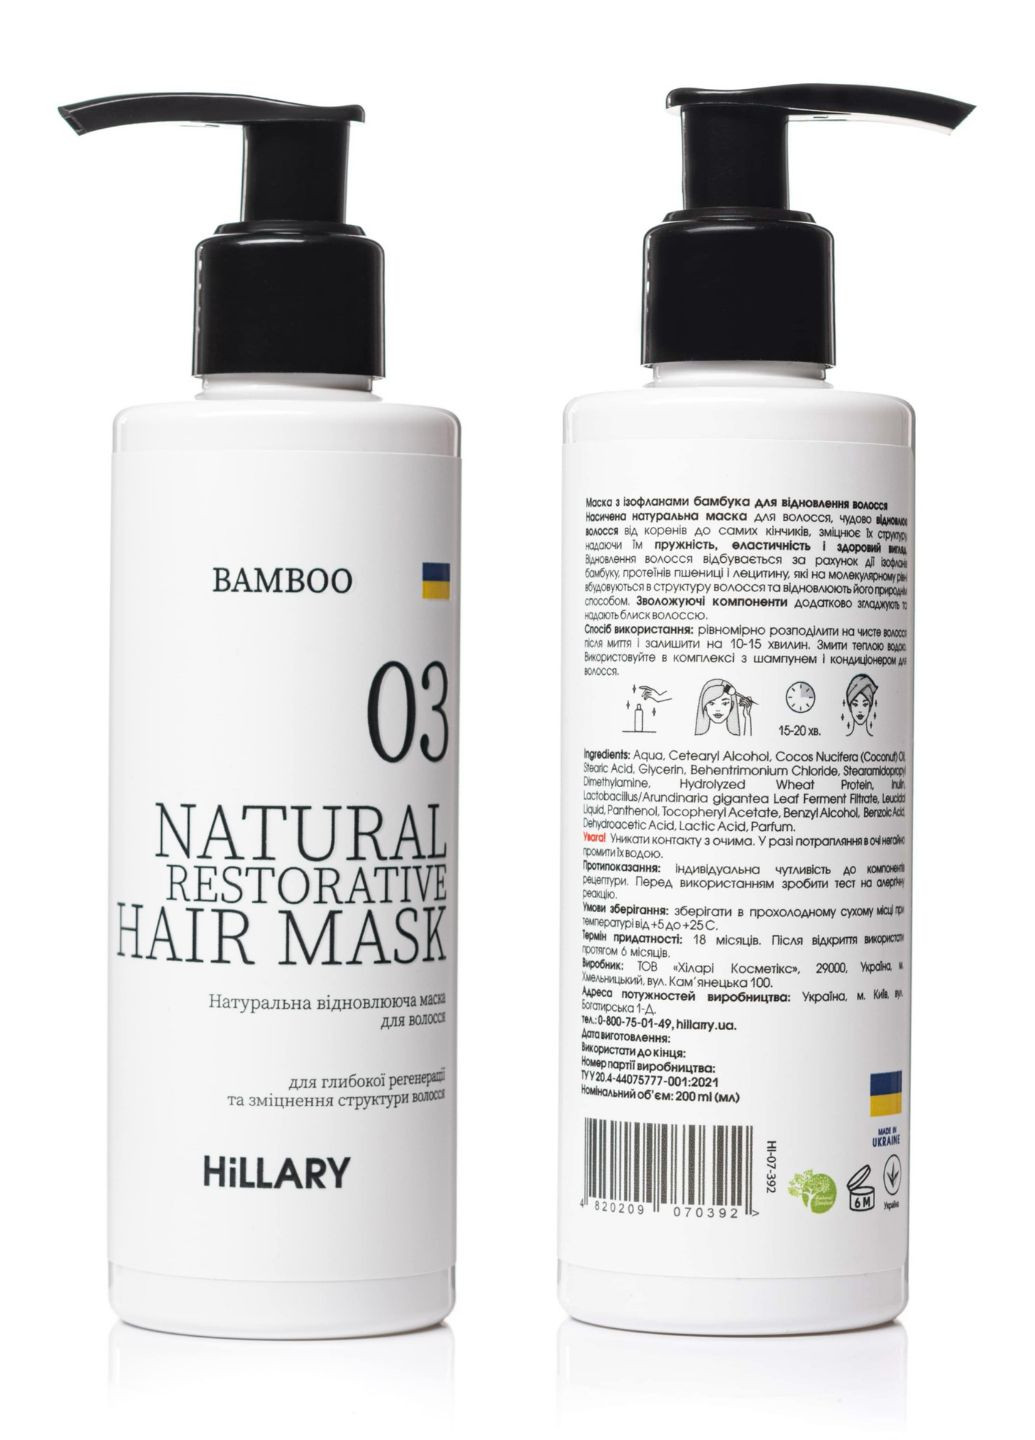 Комплекс Serenoa & РР Hair Loss Control + Натуральная маска Bamboo Hillary (280899395)